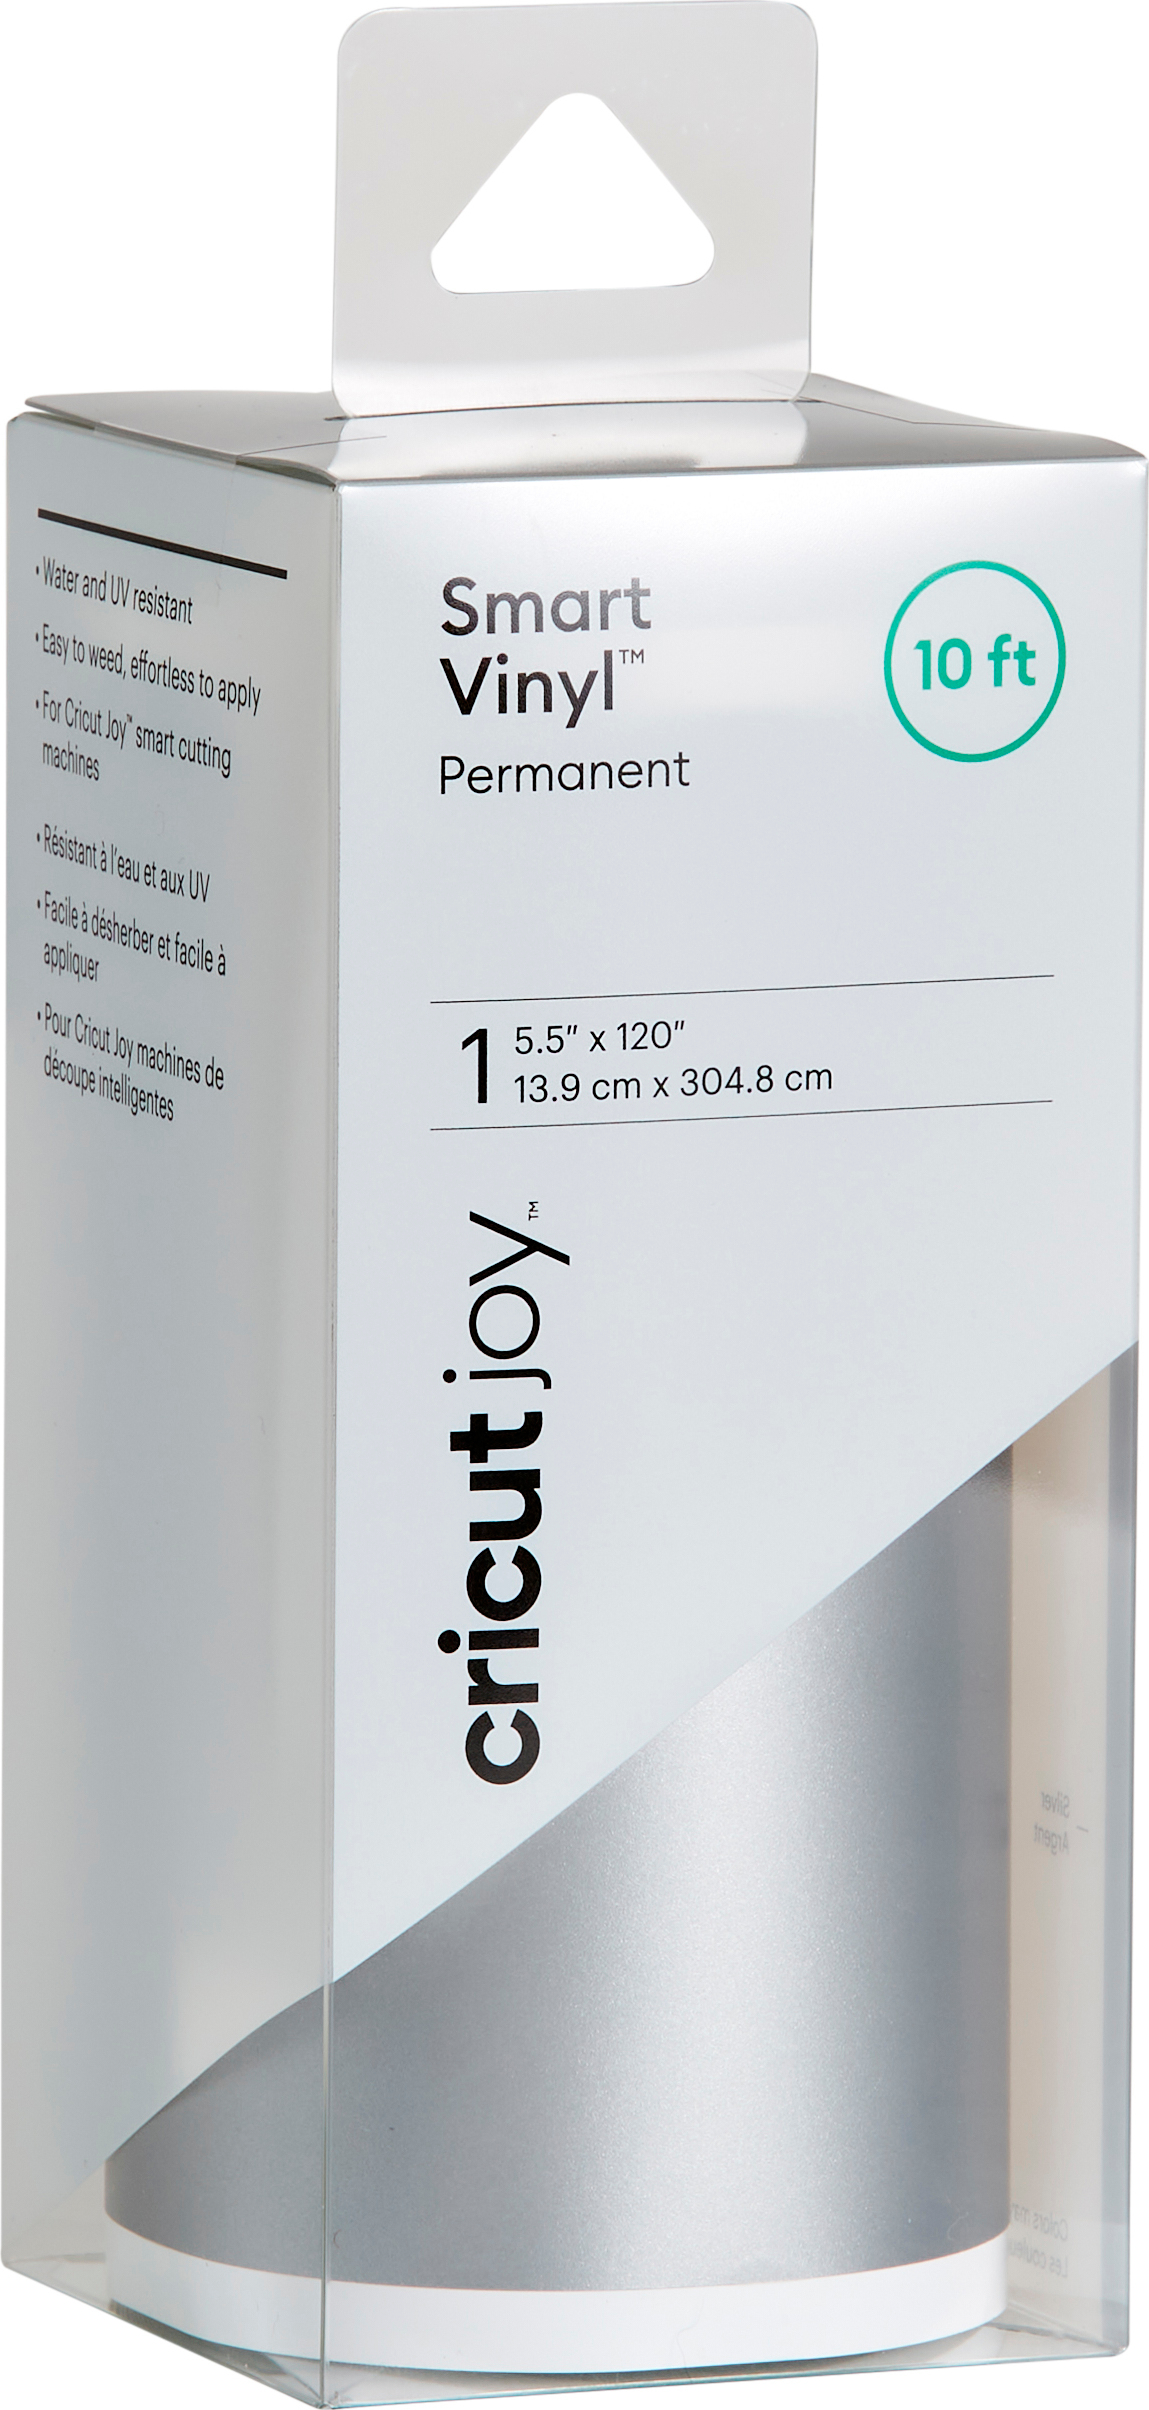 Cricut Joy Permanent Smart Vinyl - White